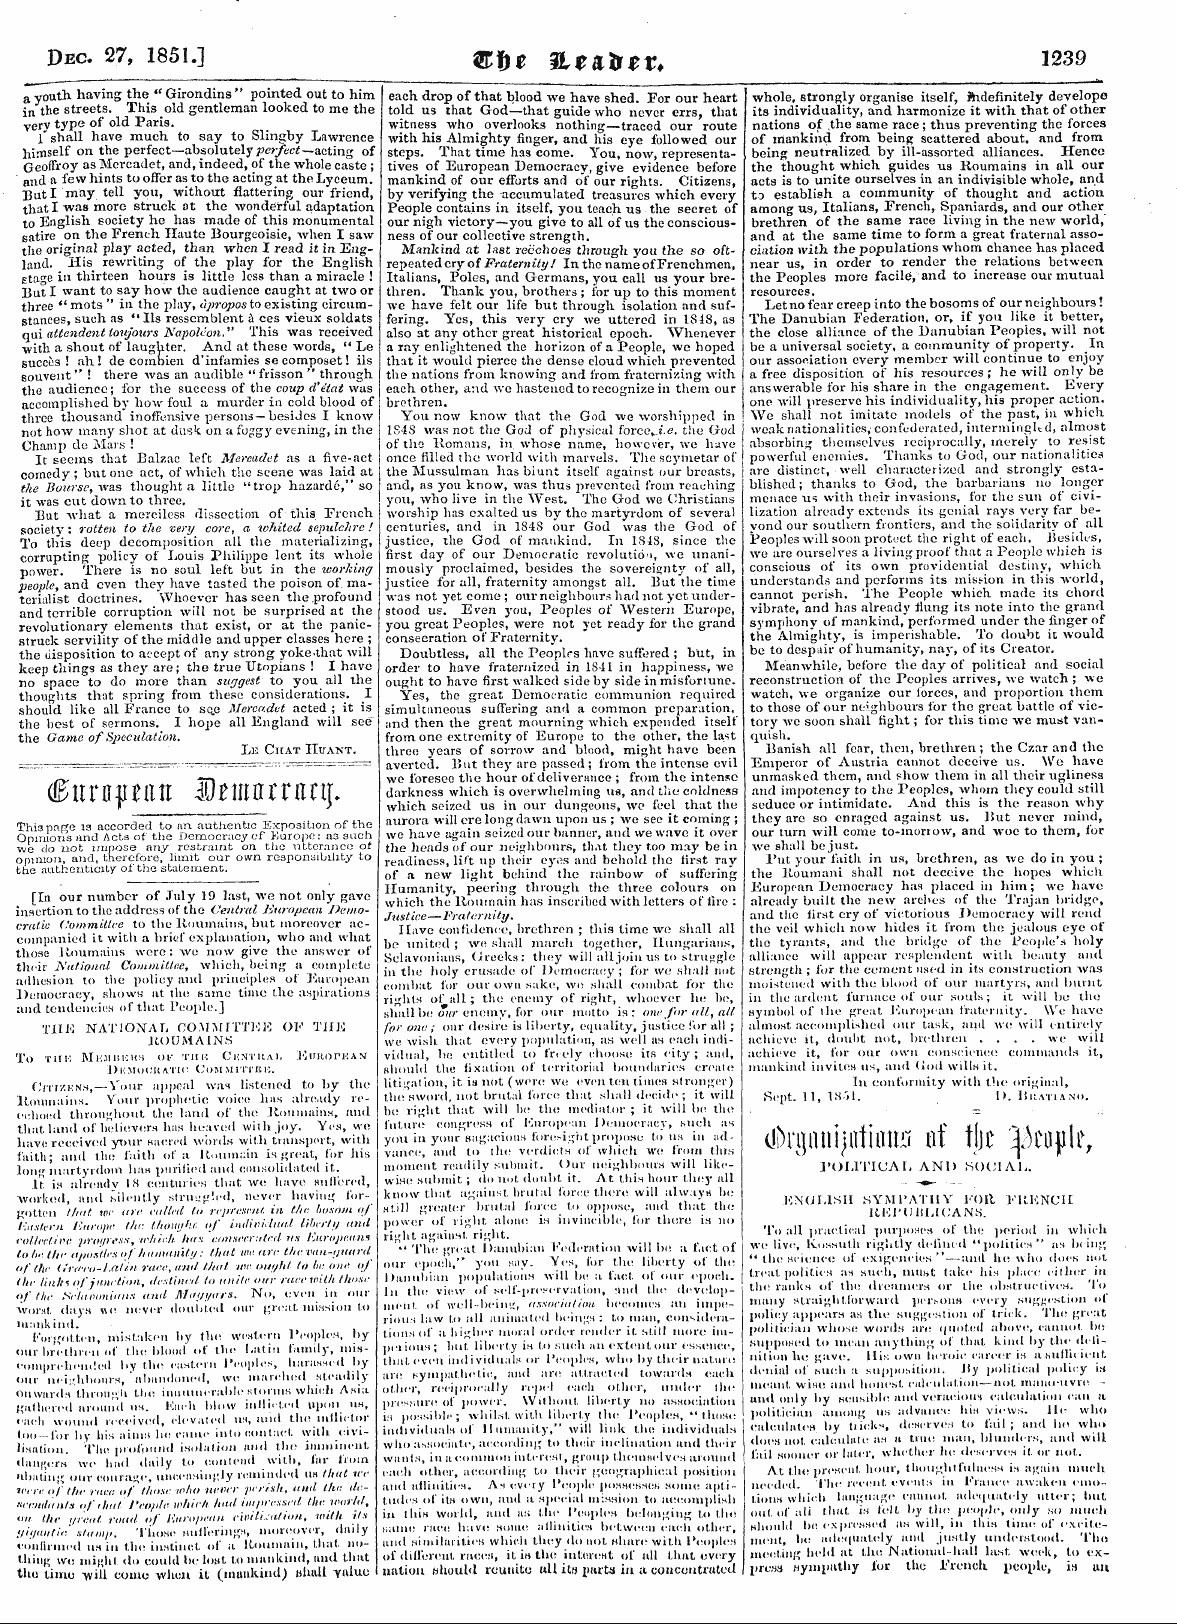 Leader (1850-1860): jS F Y, Country edition - Dec. 27, 1851.] &%$ ^It^Tt, 1239